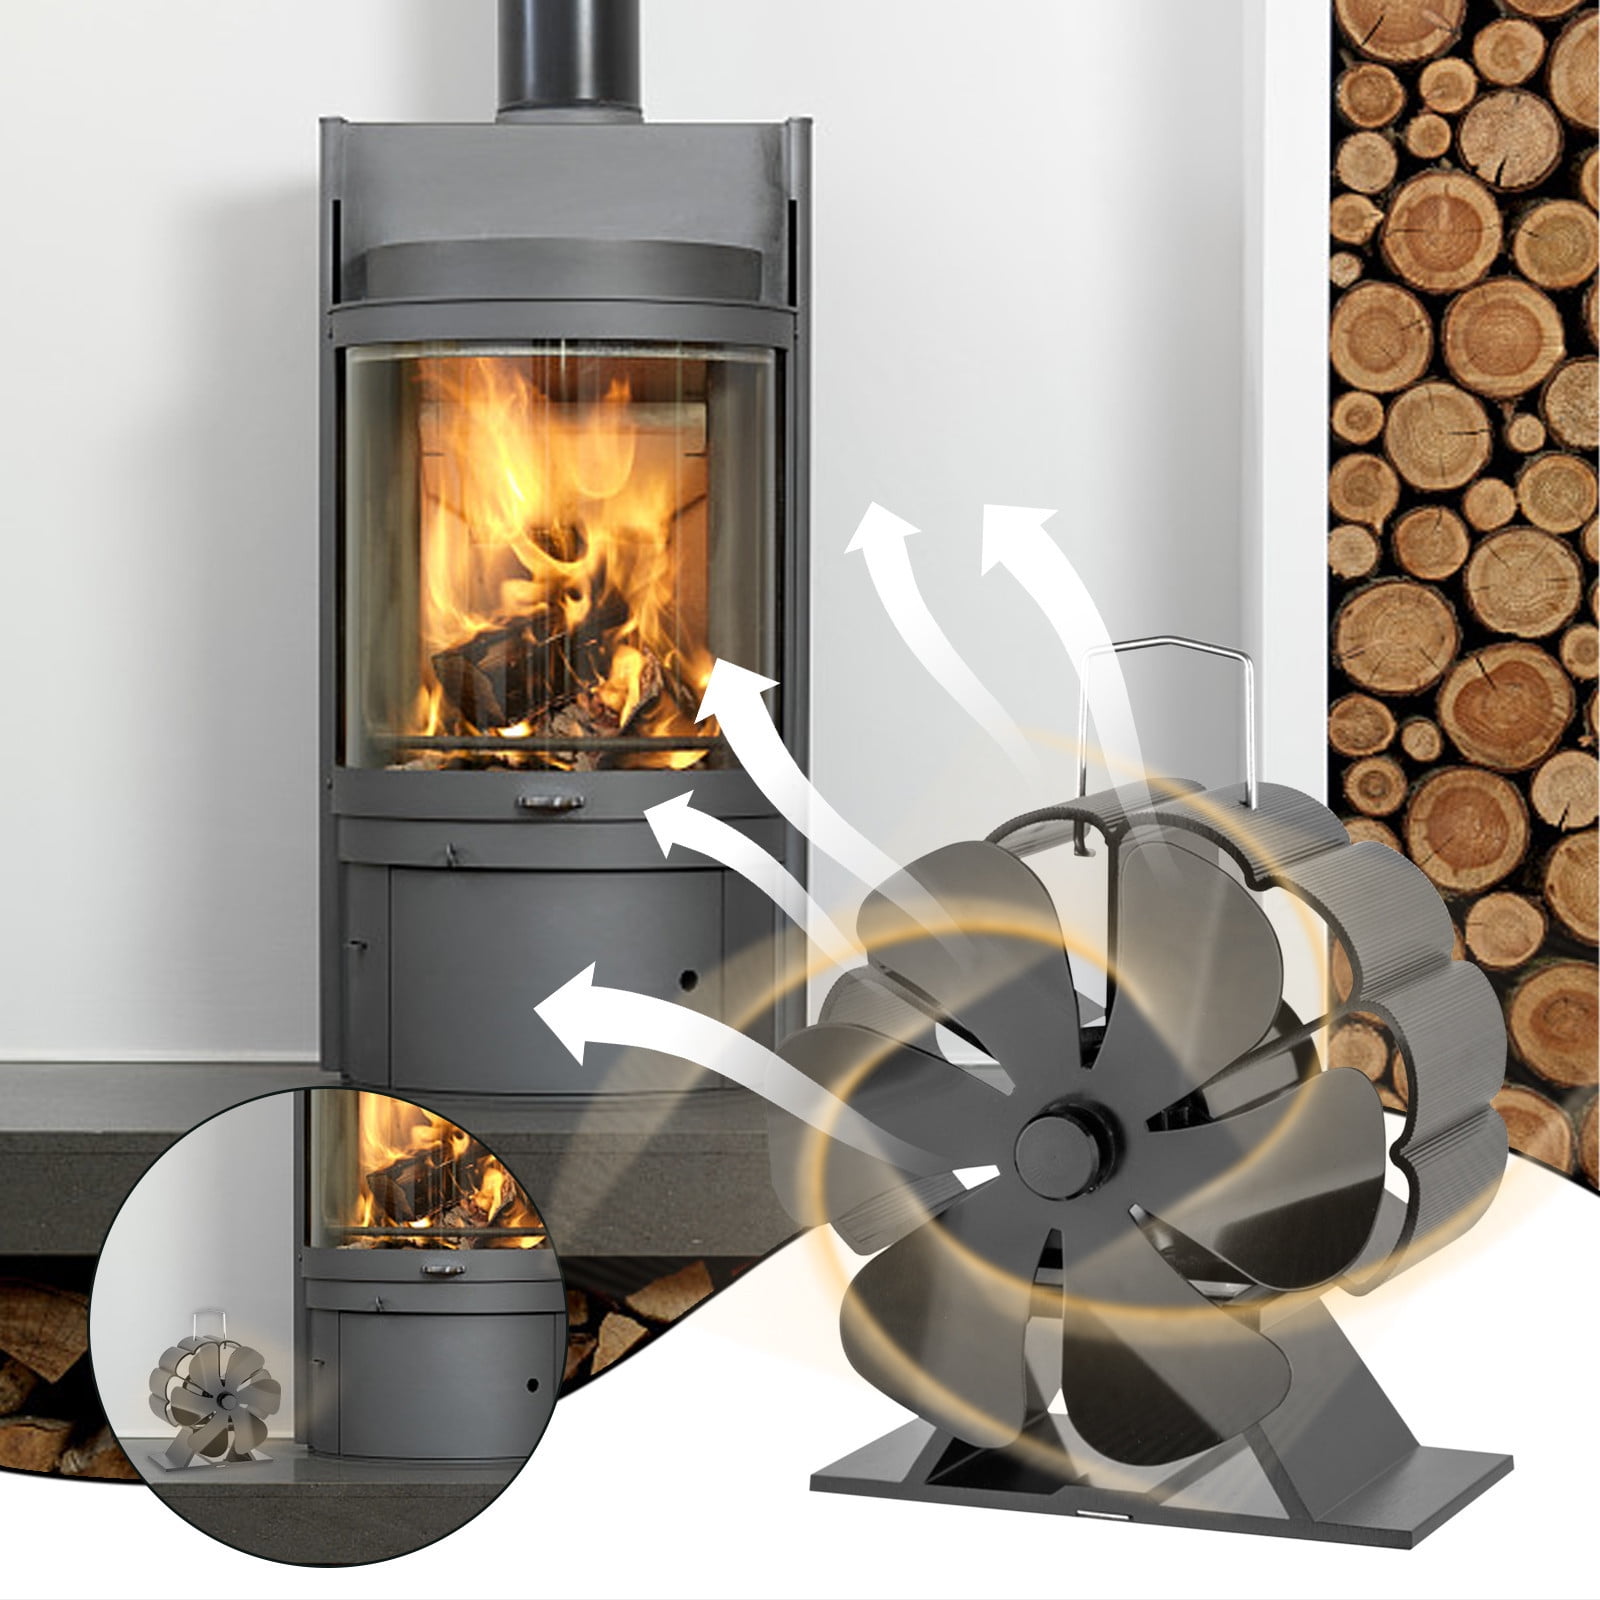 Vikakiooze Wood Stove Fan Heat Powered,6 Blades Motors Fireplace  Fan,Thermoelectric Fan For Wood Burning Stove/Pellet/Log Burner